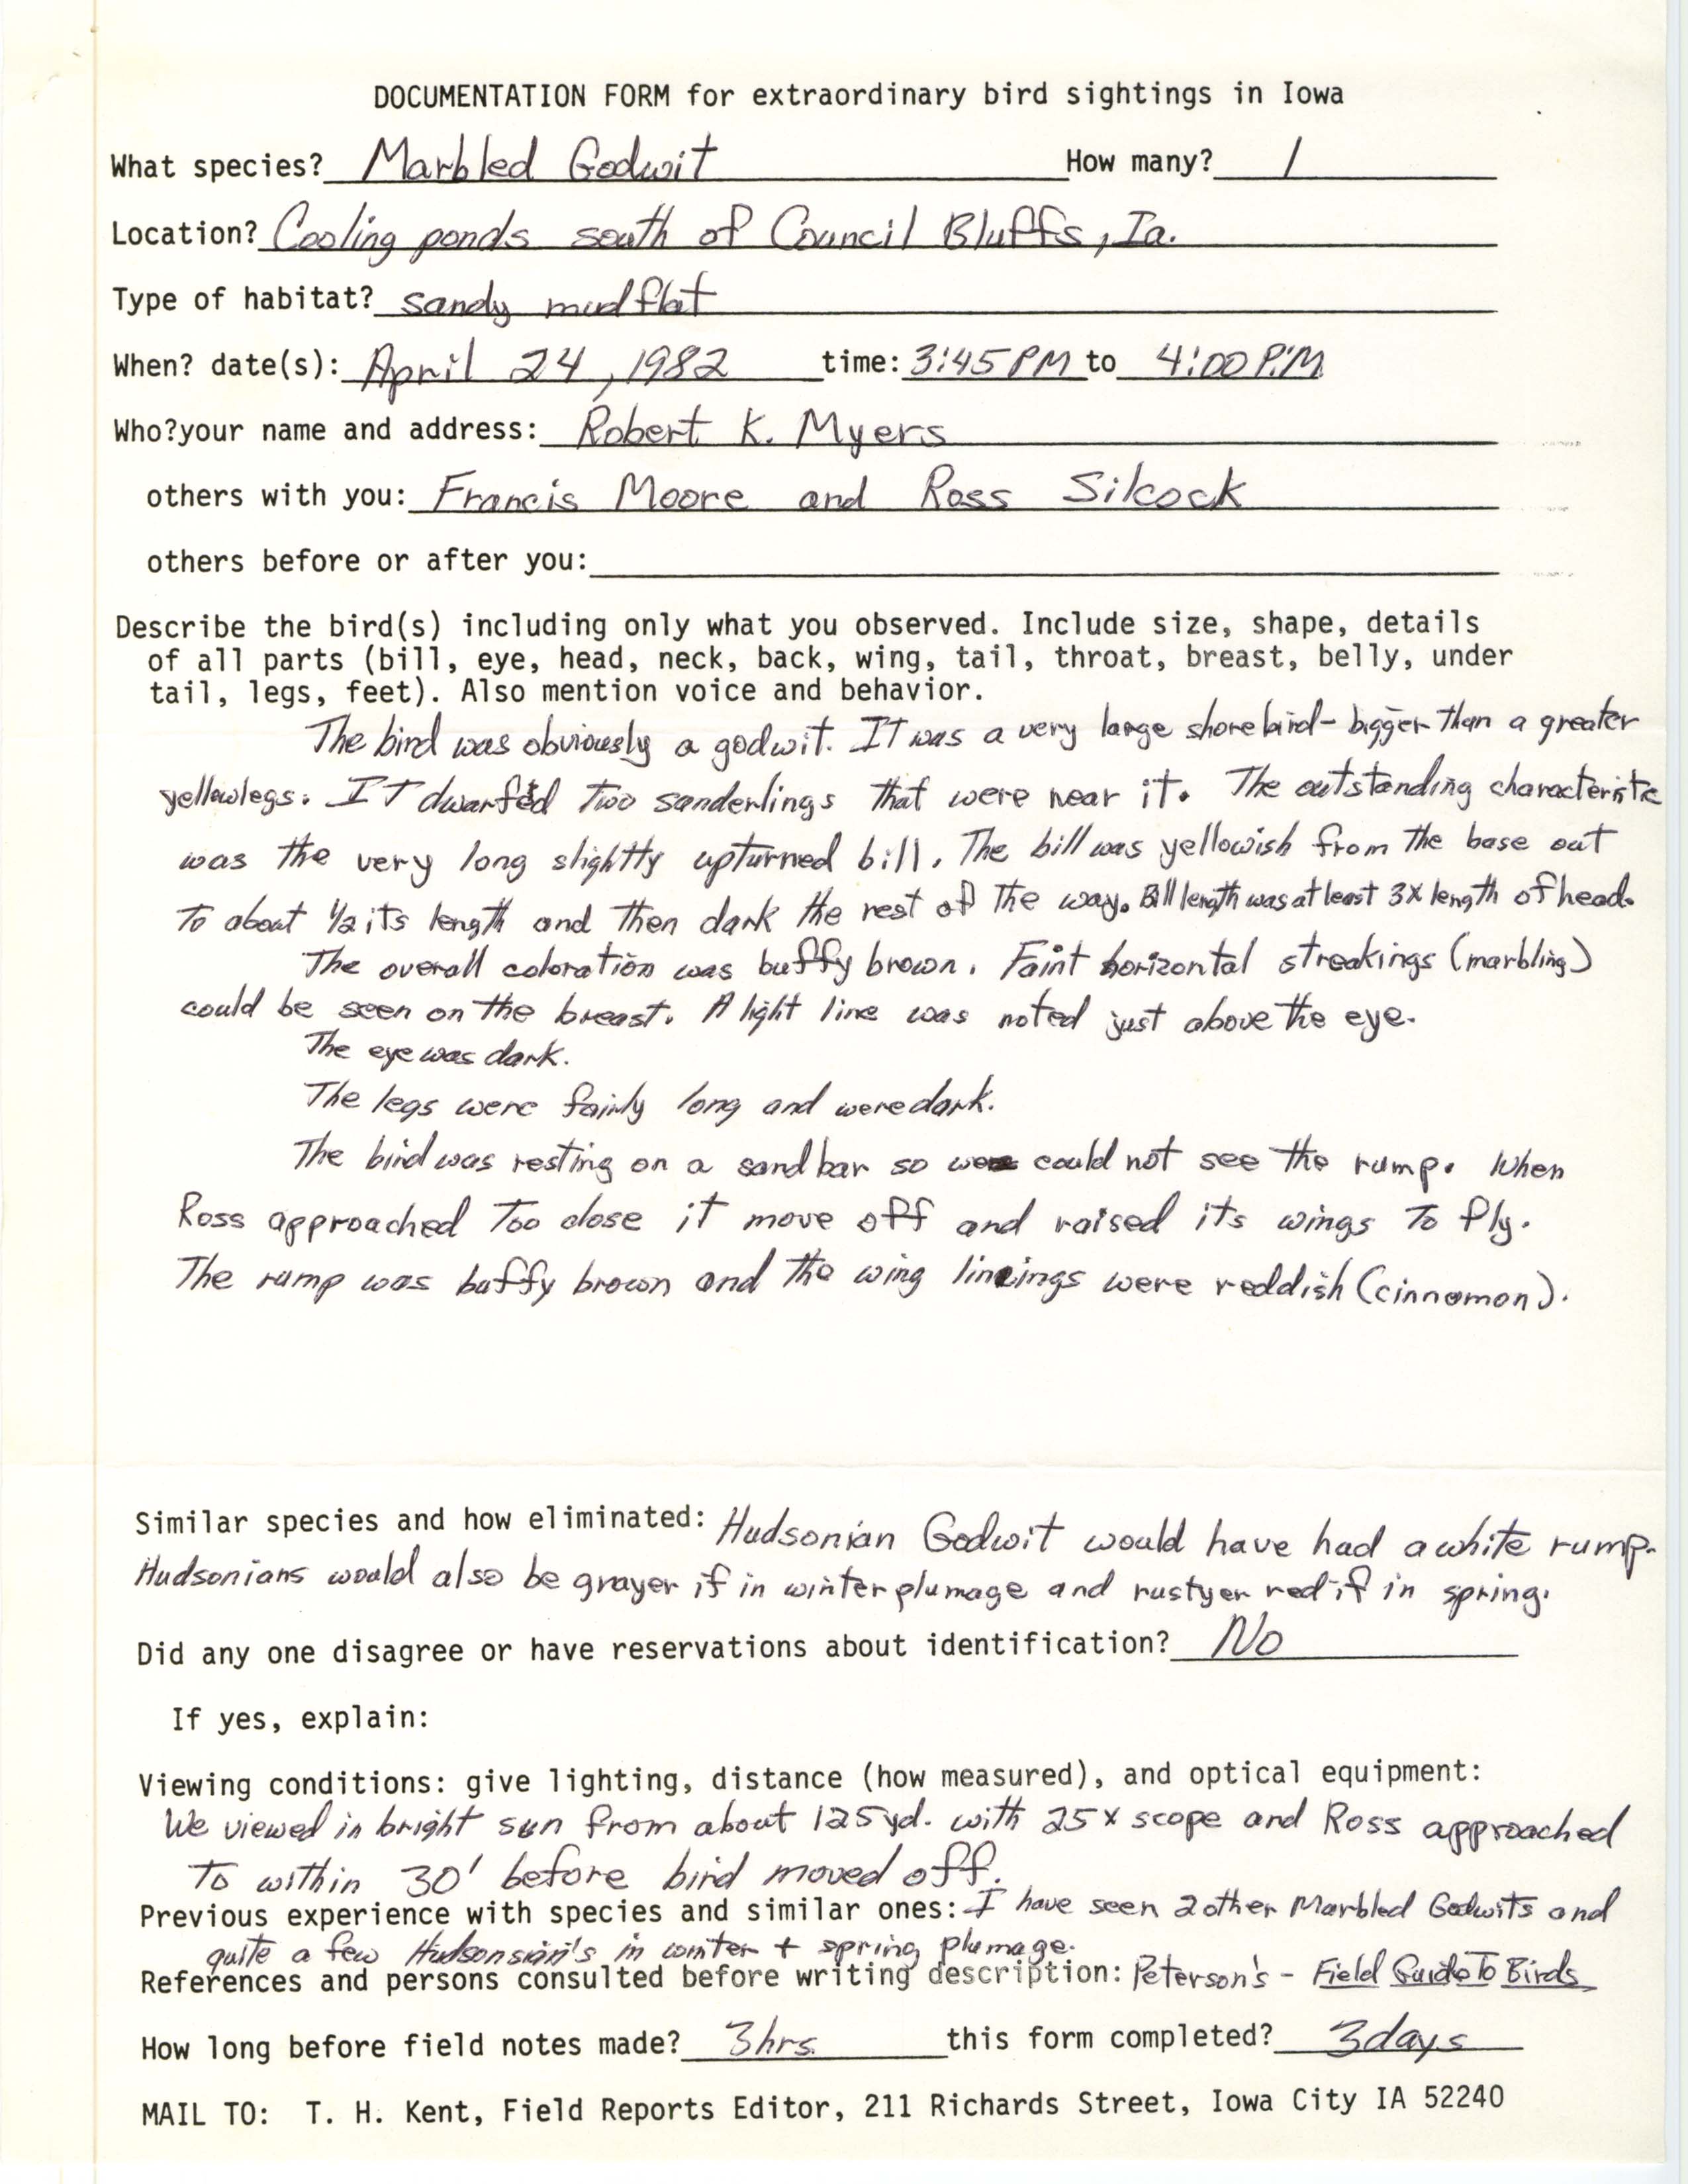 Rare bird documentation form for Marbled Godwit at Council Bluffs, 1982